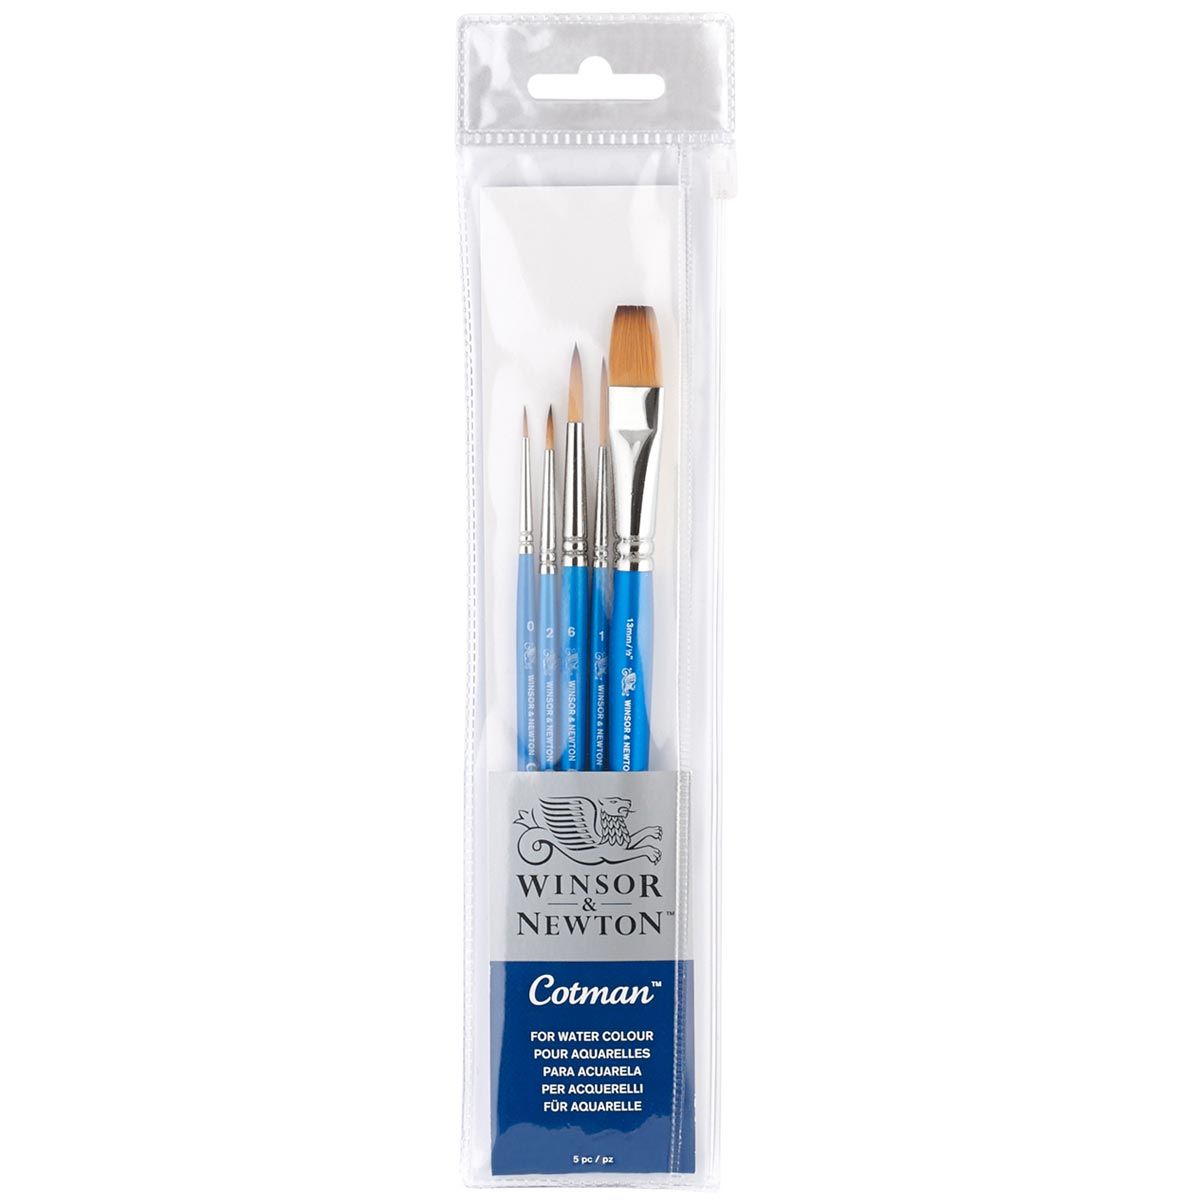 Winsor & Newton Cotman Watercolour Brush - 5pc Set